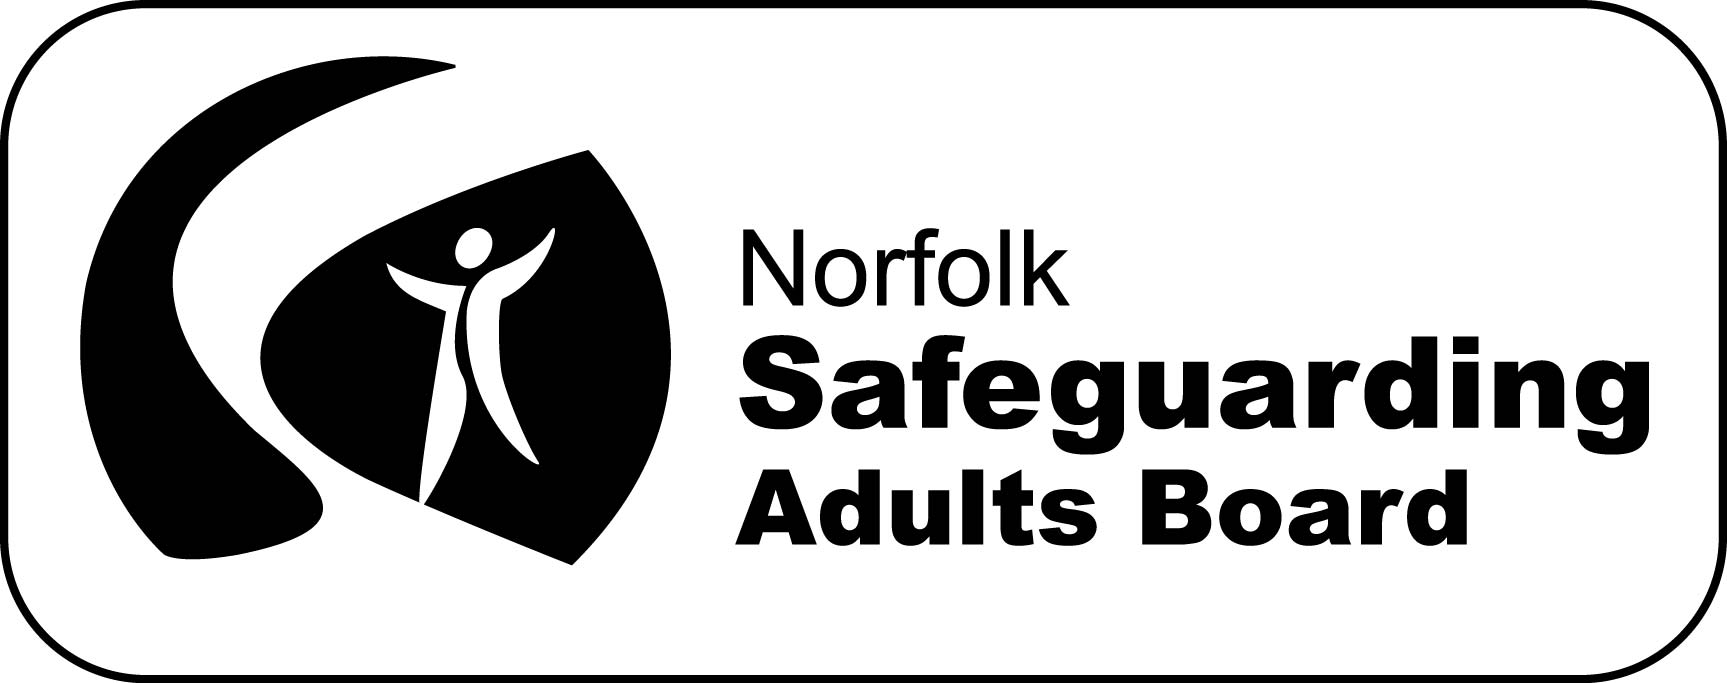 Norfolk Safeguarding Adults Board logo